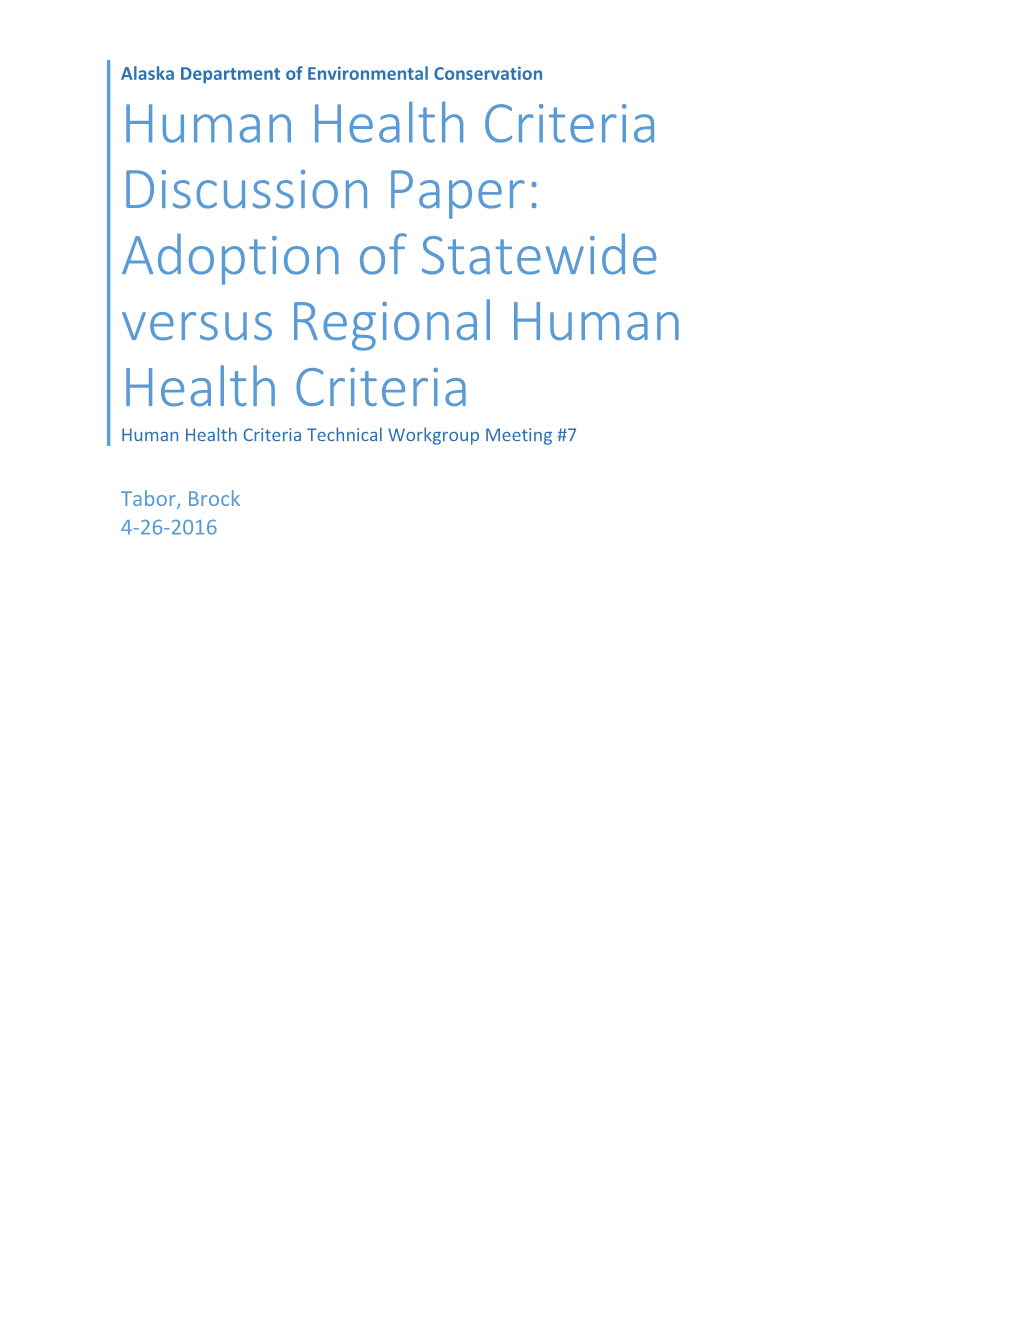 Human Health Criteria Discussion Paper: Adoption of Statewide Versus Regional Human Health